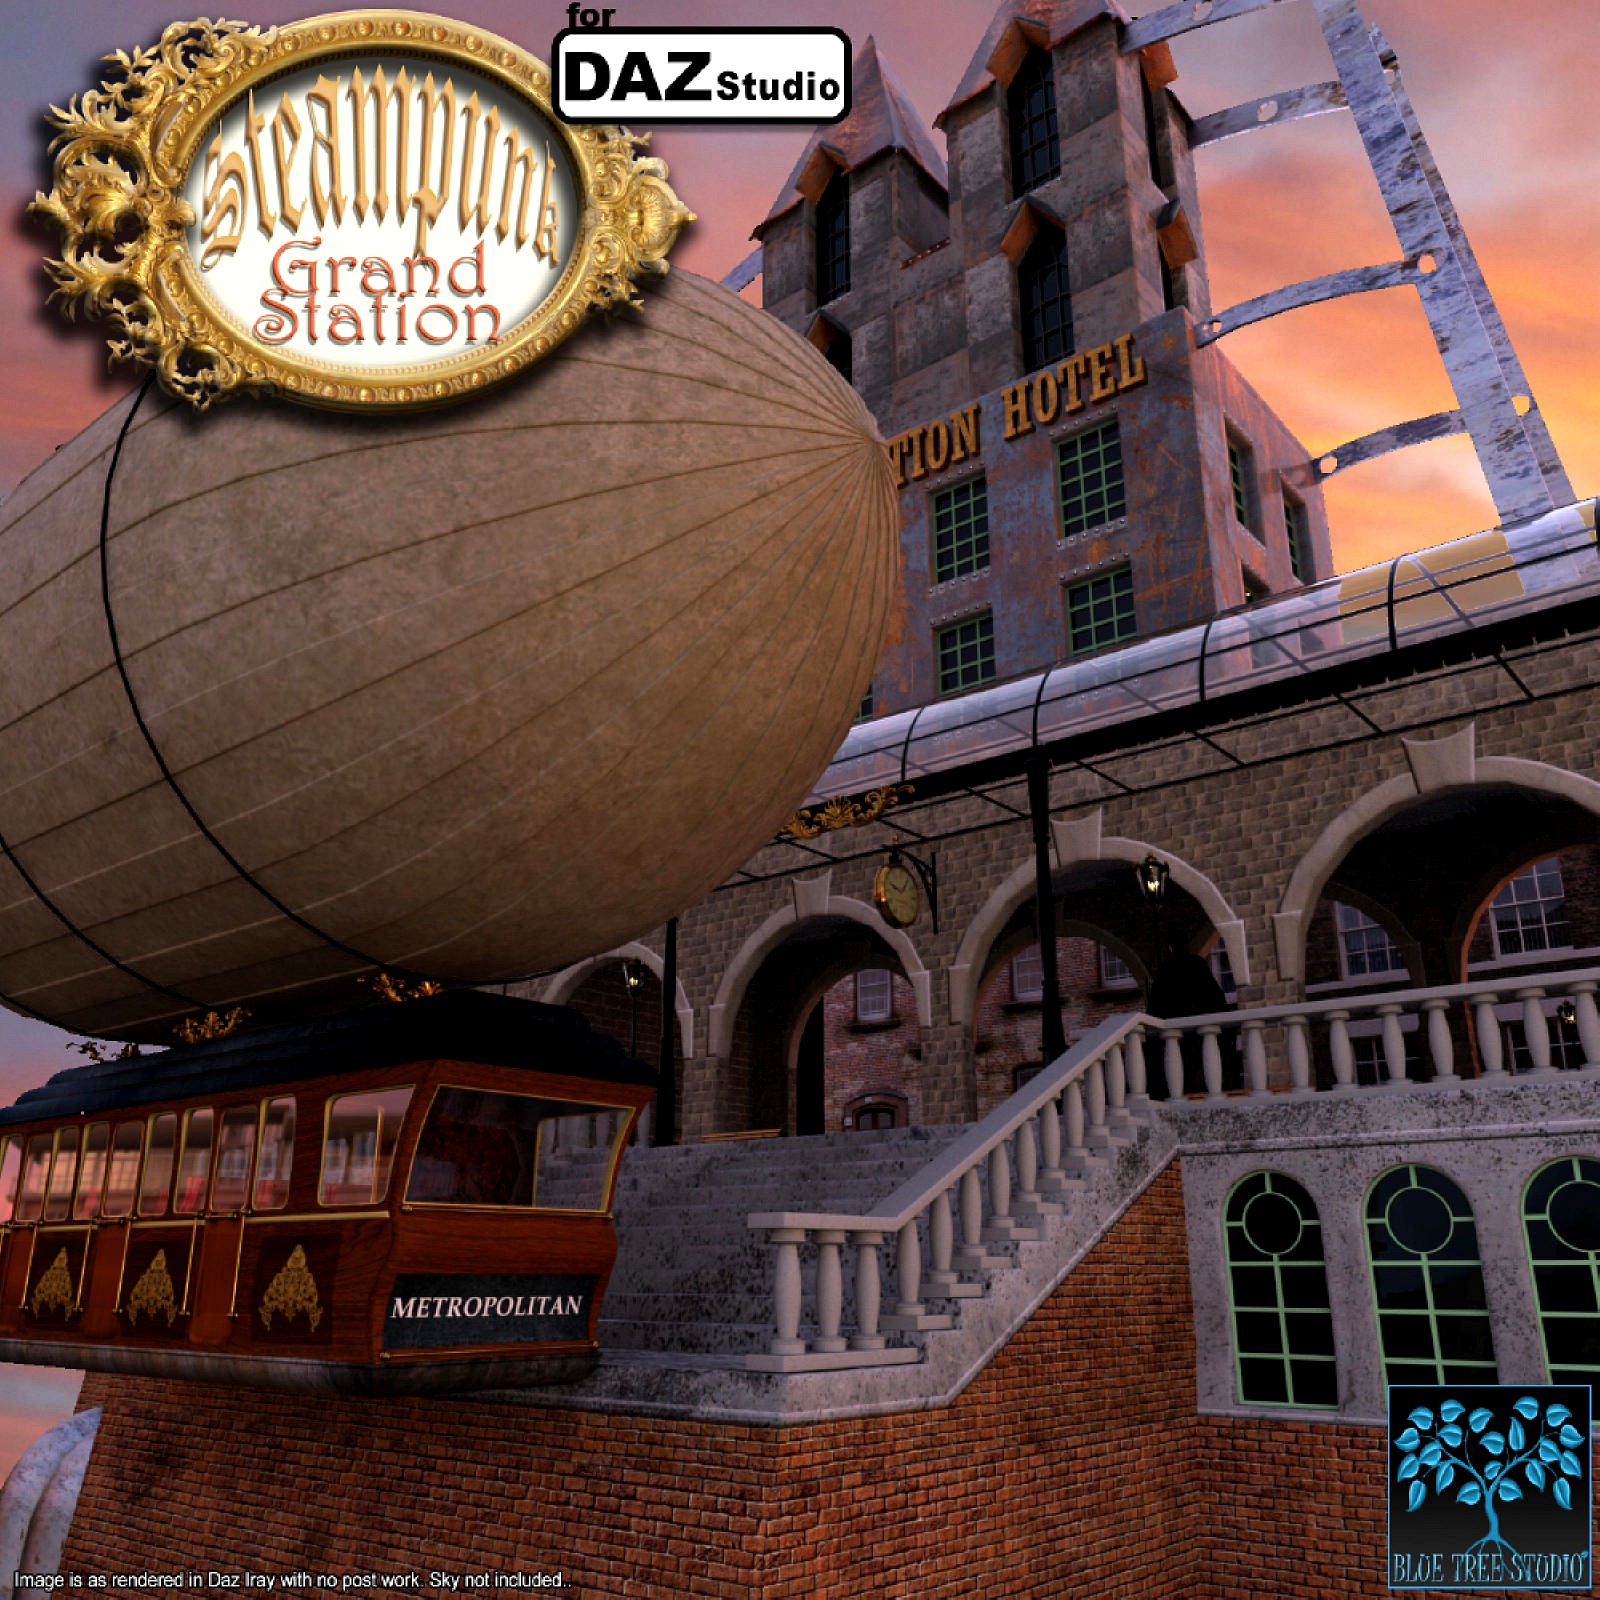 Steampunk Grand Station for Daz